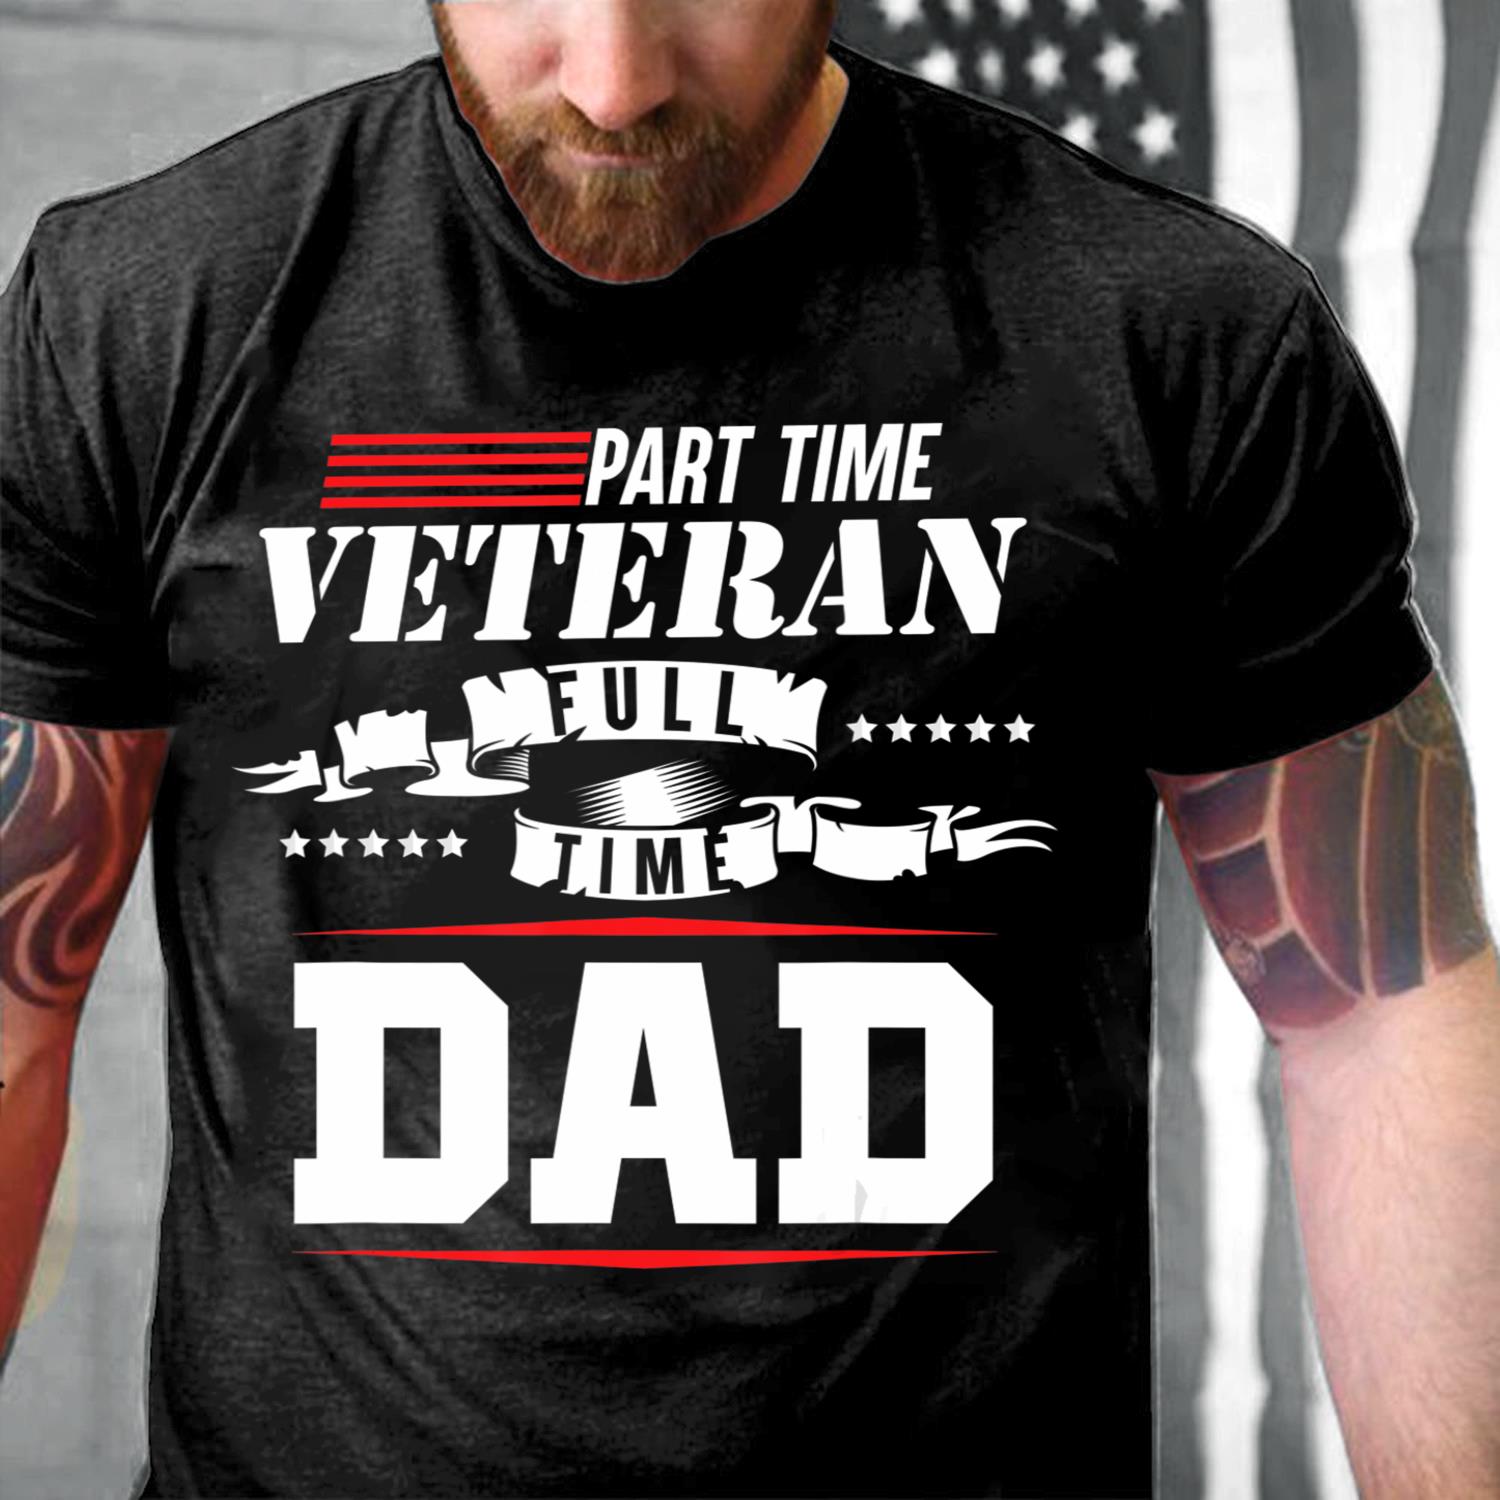 Part-Time Veteran Full Time Dad Funny Veterans Day Gift T-Shirt